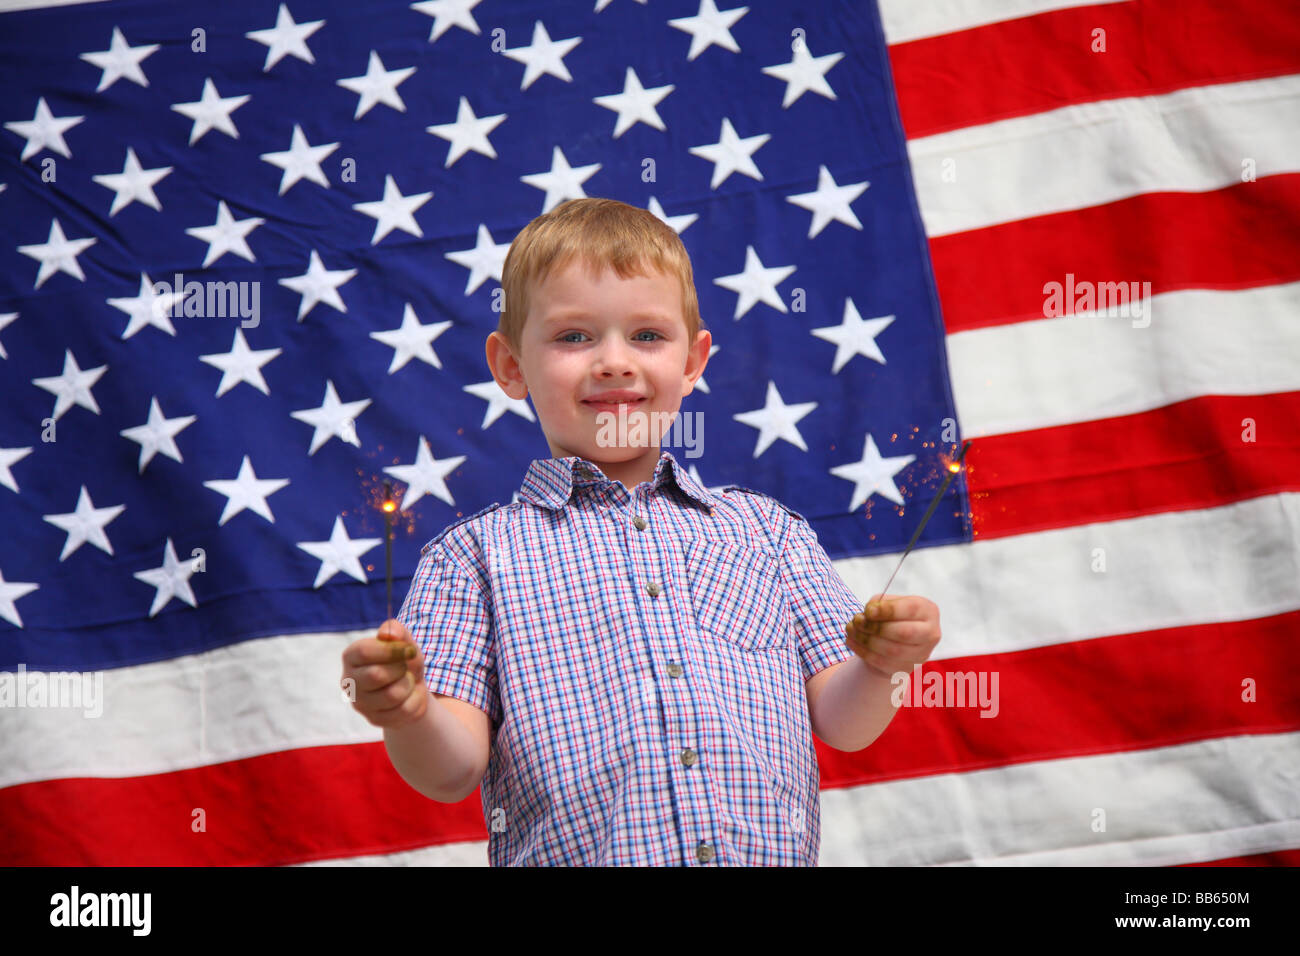 Jeune garçon waving sparklers in front of American flag Banque D'Images